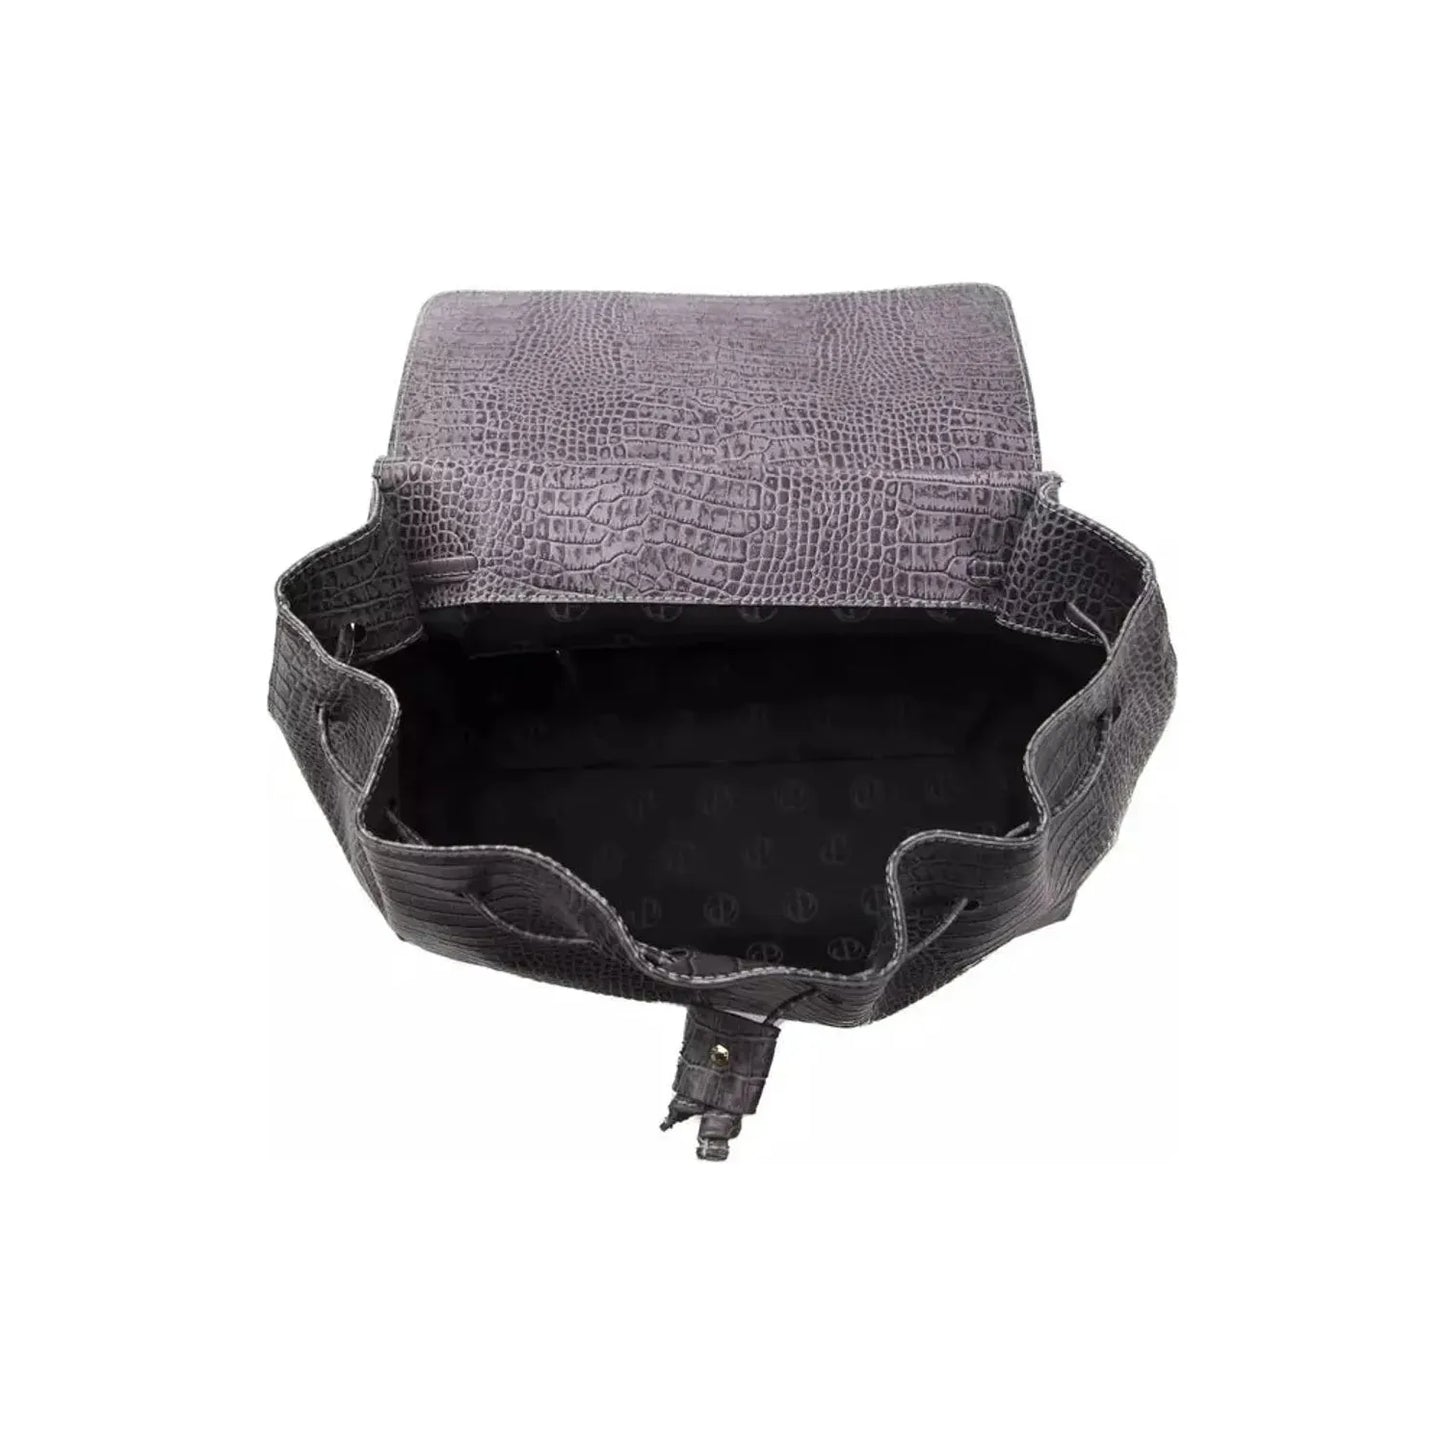 Pompei Donatella | Gray Leather Handbag  | McRichard Designer Brands